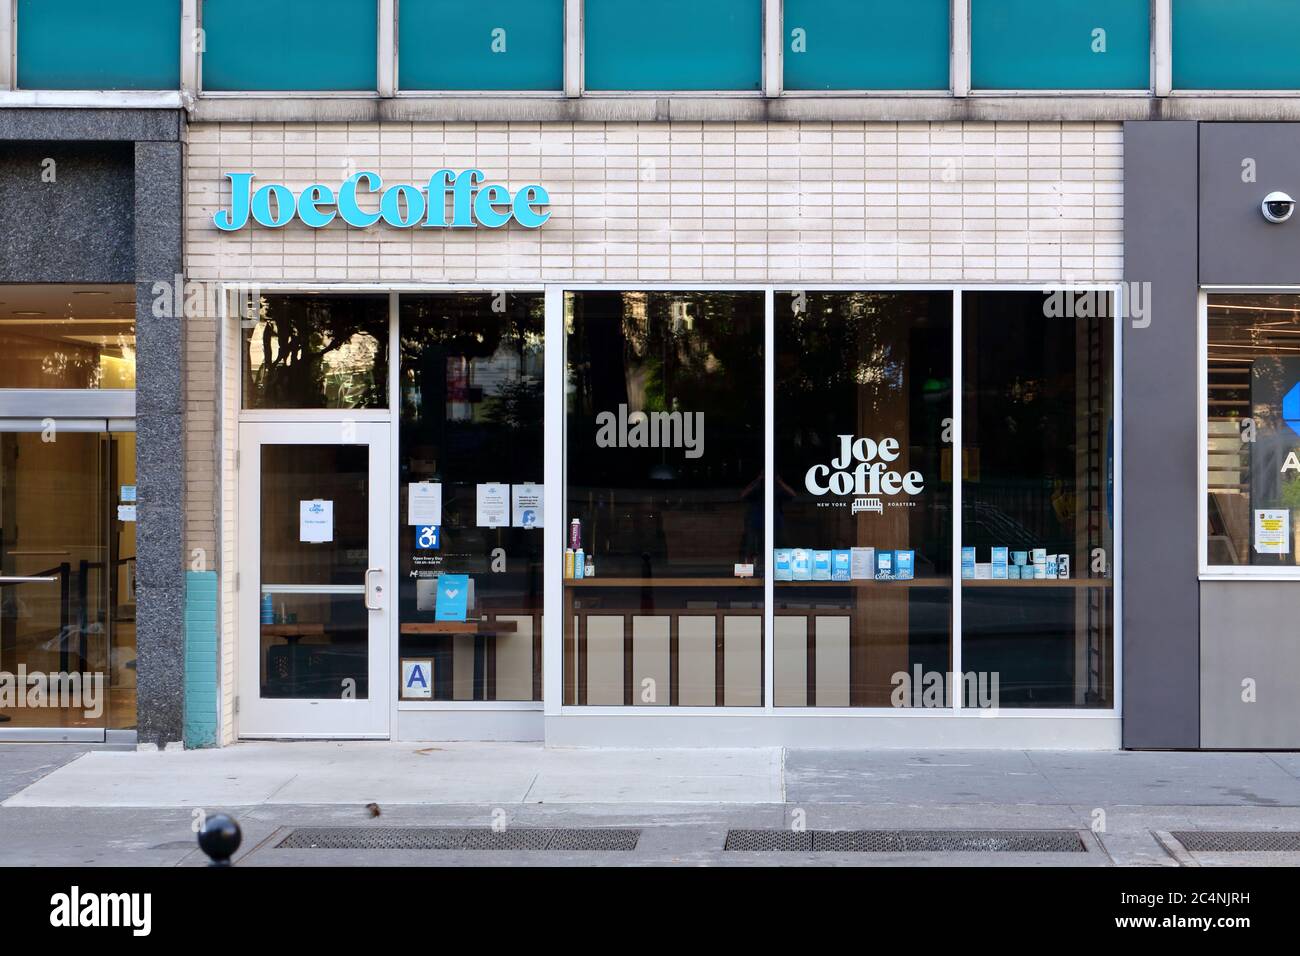 Joe Coffee Company, 29 Union Square West, New York, NYC Foto von einem Café am Manhattan Union Square. Stockfoto